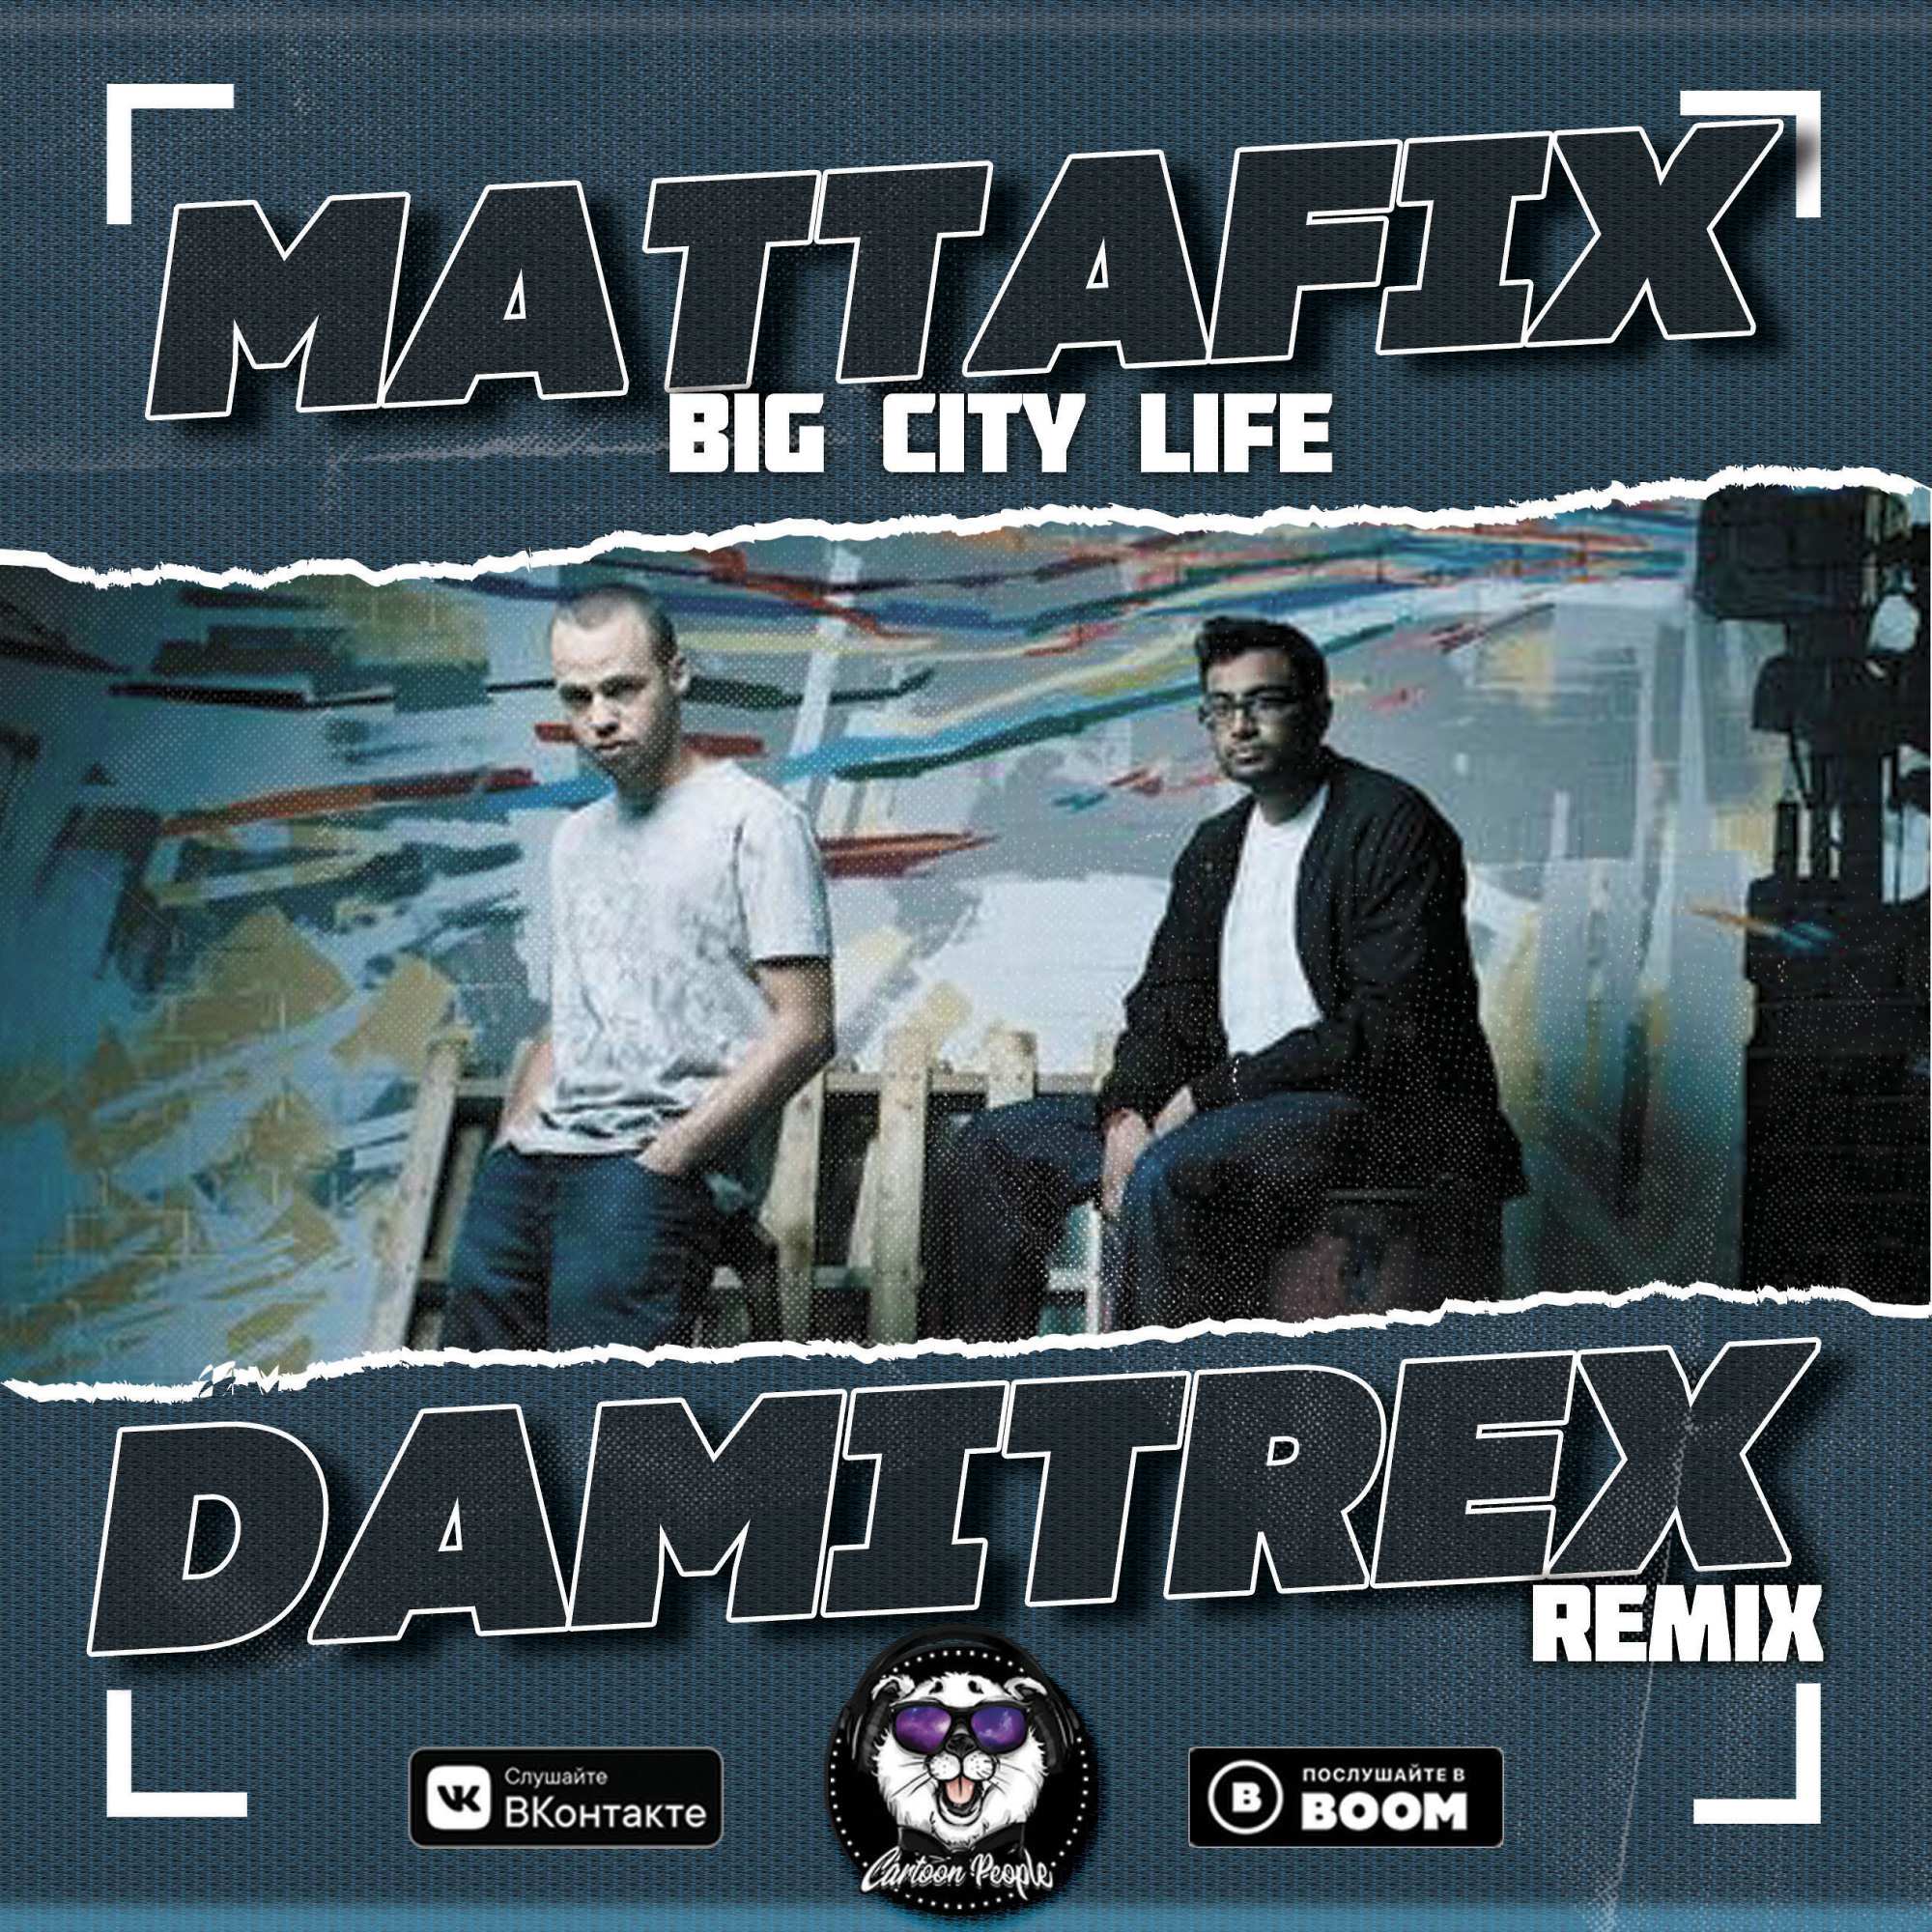 Big city life. Матафикс Биг Сити лайф. Big City Life Remix. Mattafix обложка. Mattafix big City Life обложка.